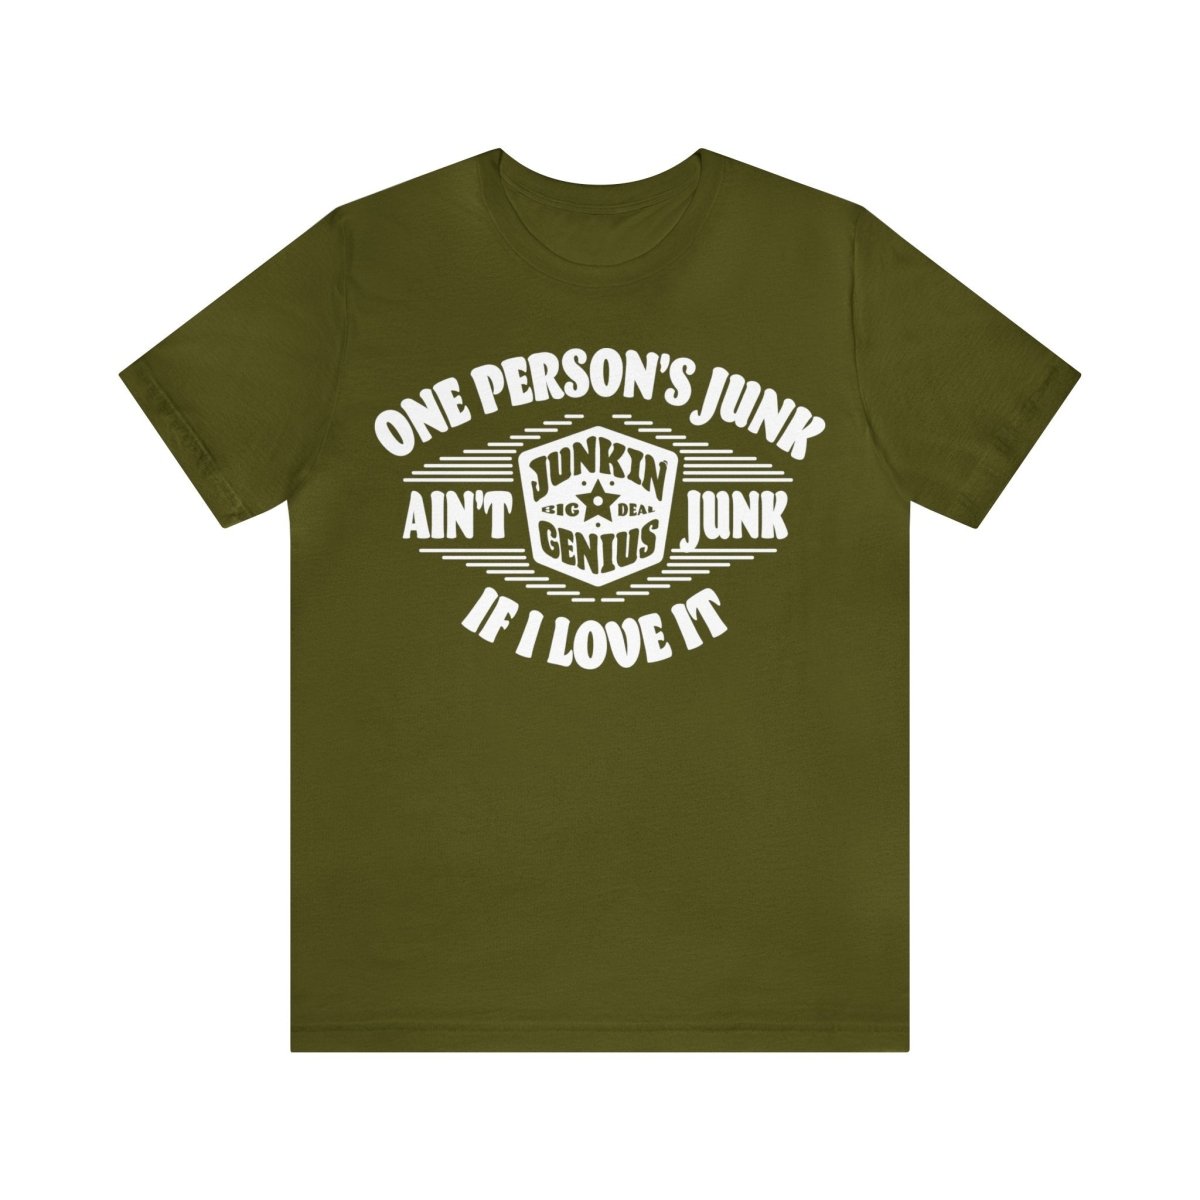 Ain't Junk If I Love It Premium T-Shirt, Antiques, Garage Sales, Flea Markets, Junkin' Genius Shopper